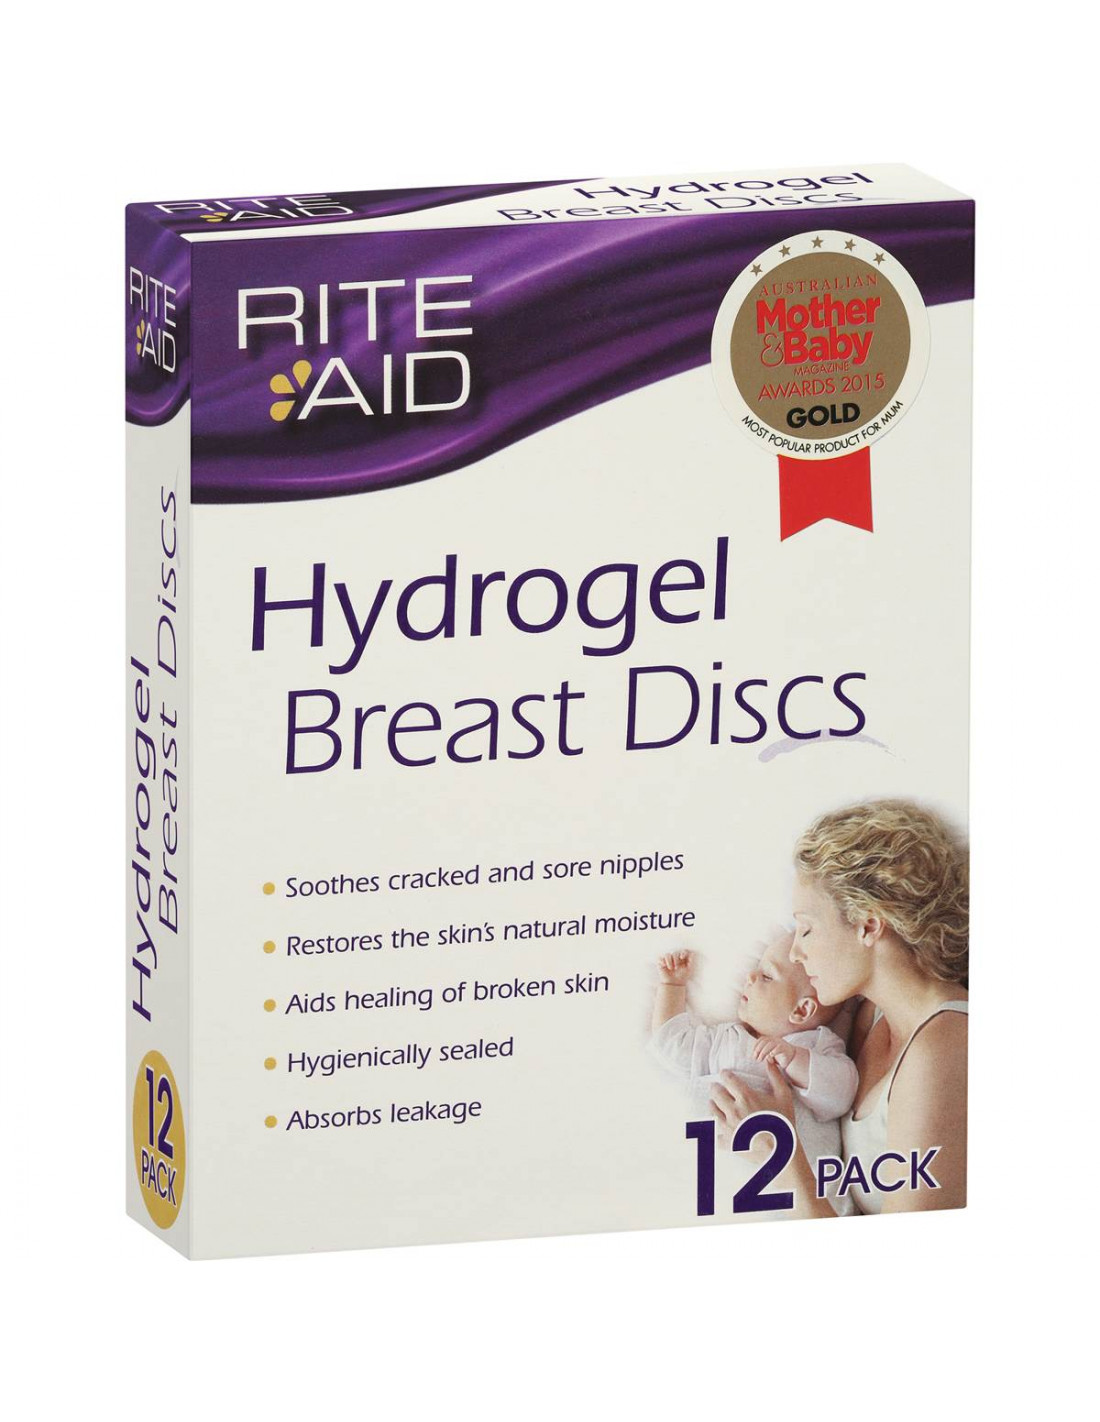 Hydrogel Breast Discs 12pk